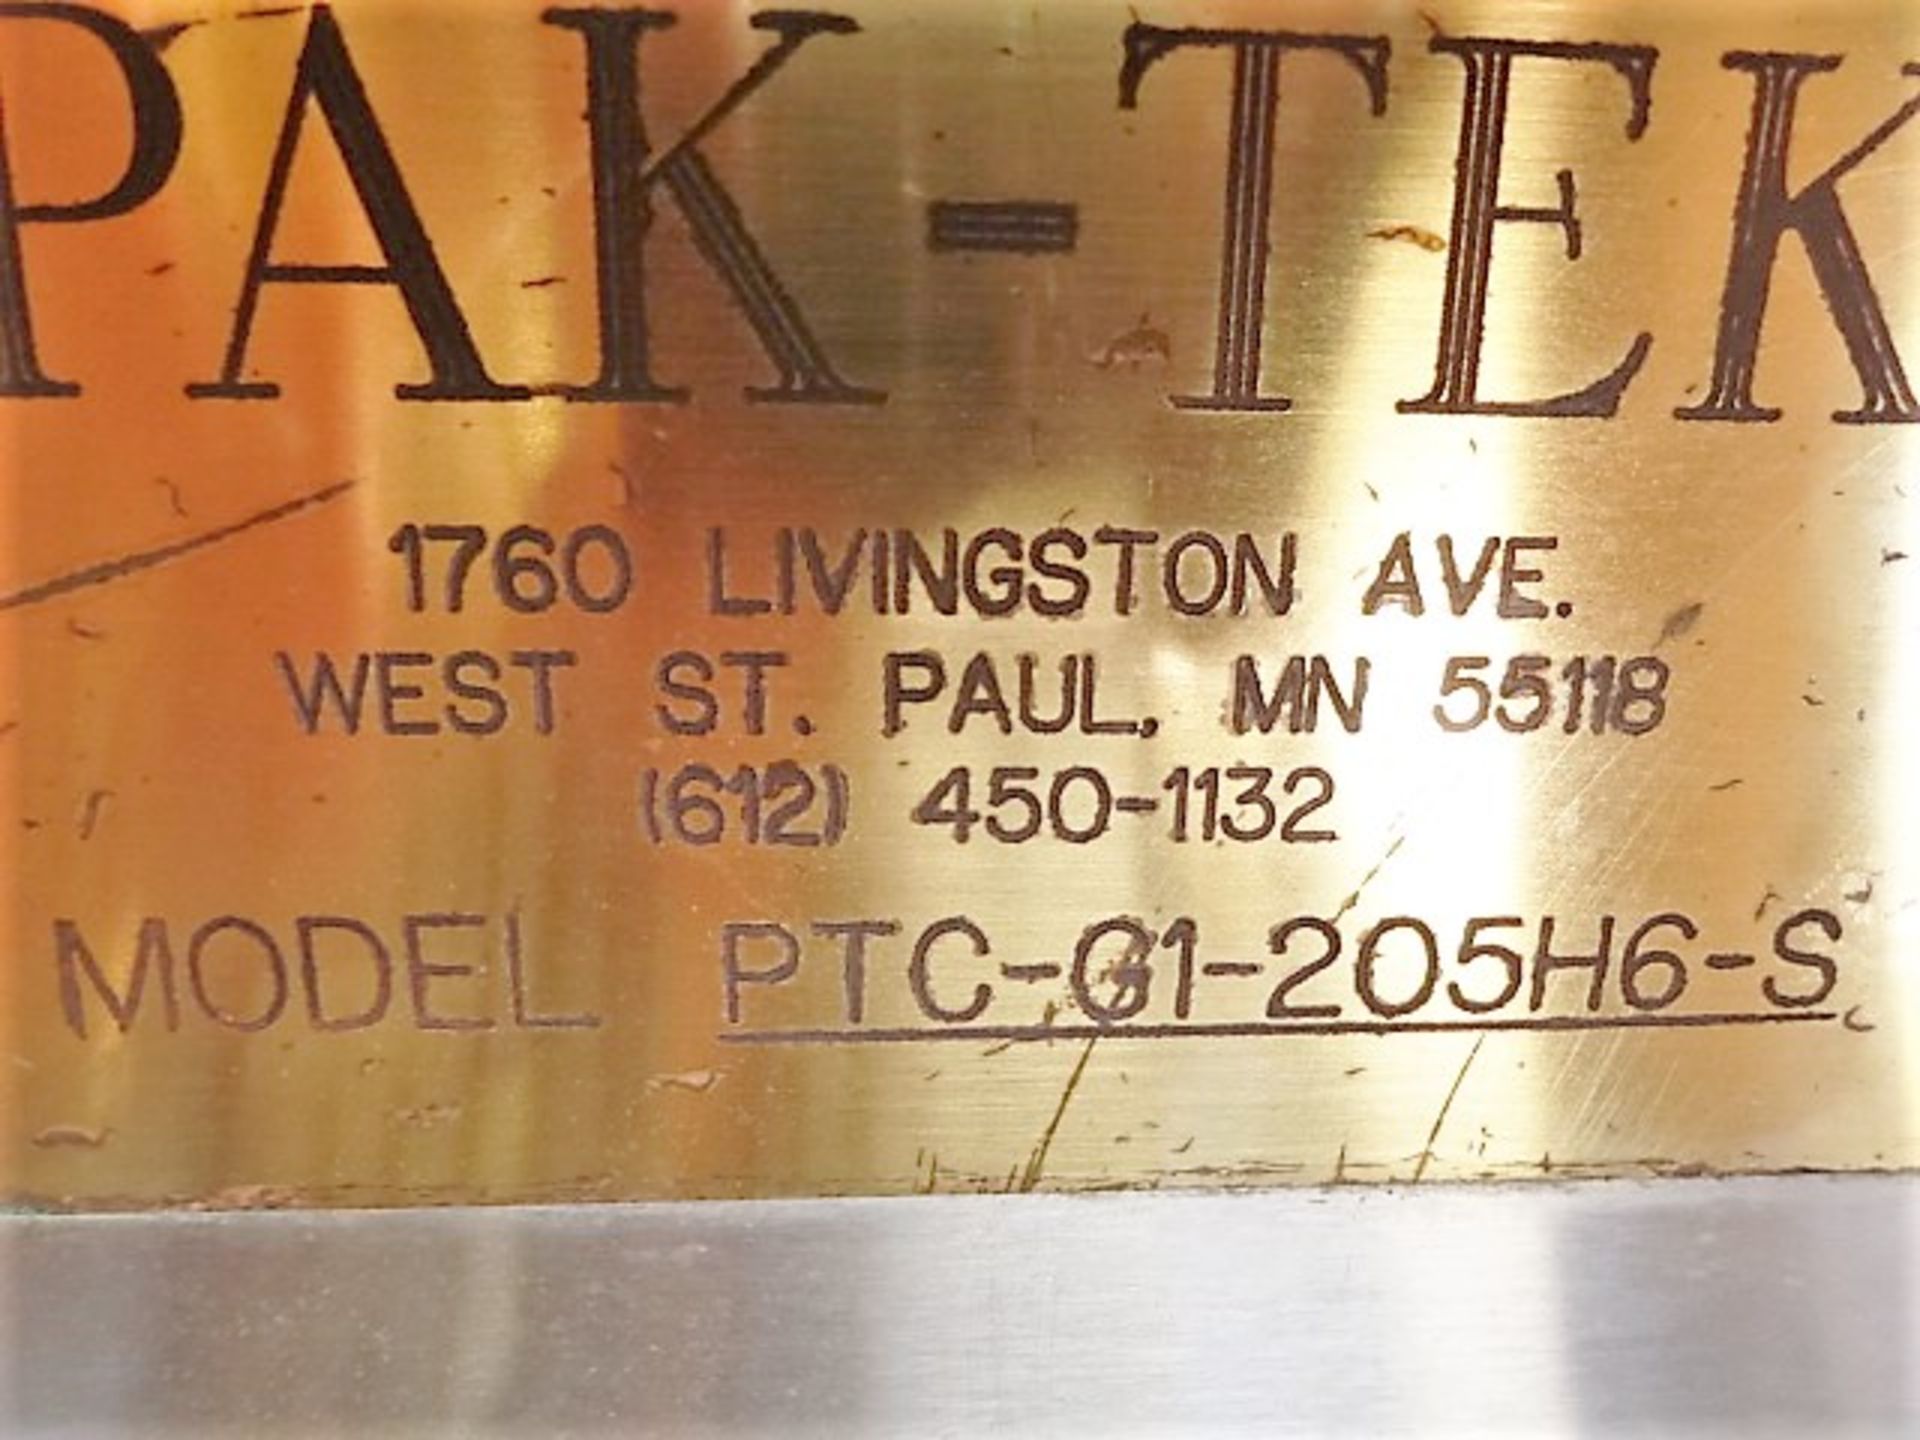 PakTek Case Packer, Model # PTC-G1, S/N 205H6-S, stainless steel unit with lowering head packer/ - Image 5 of 5